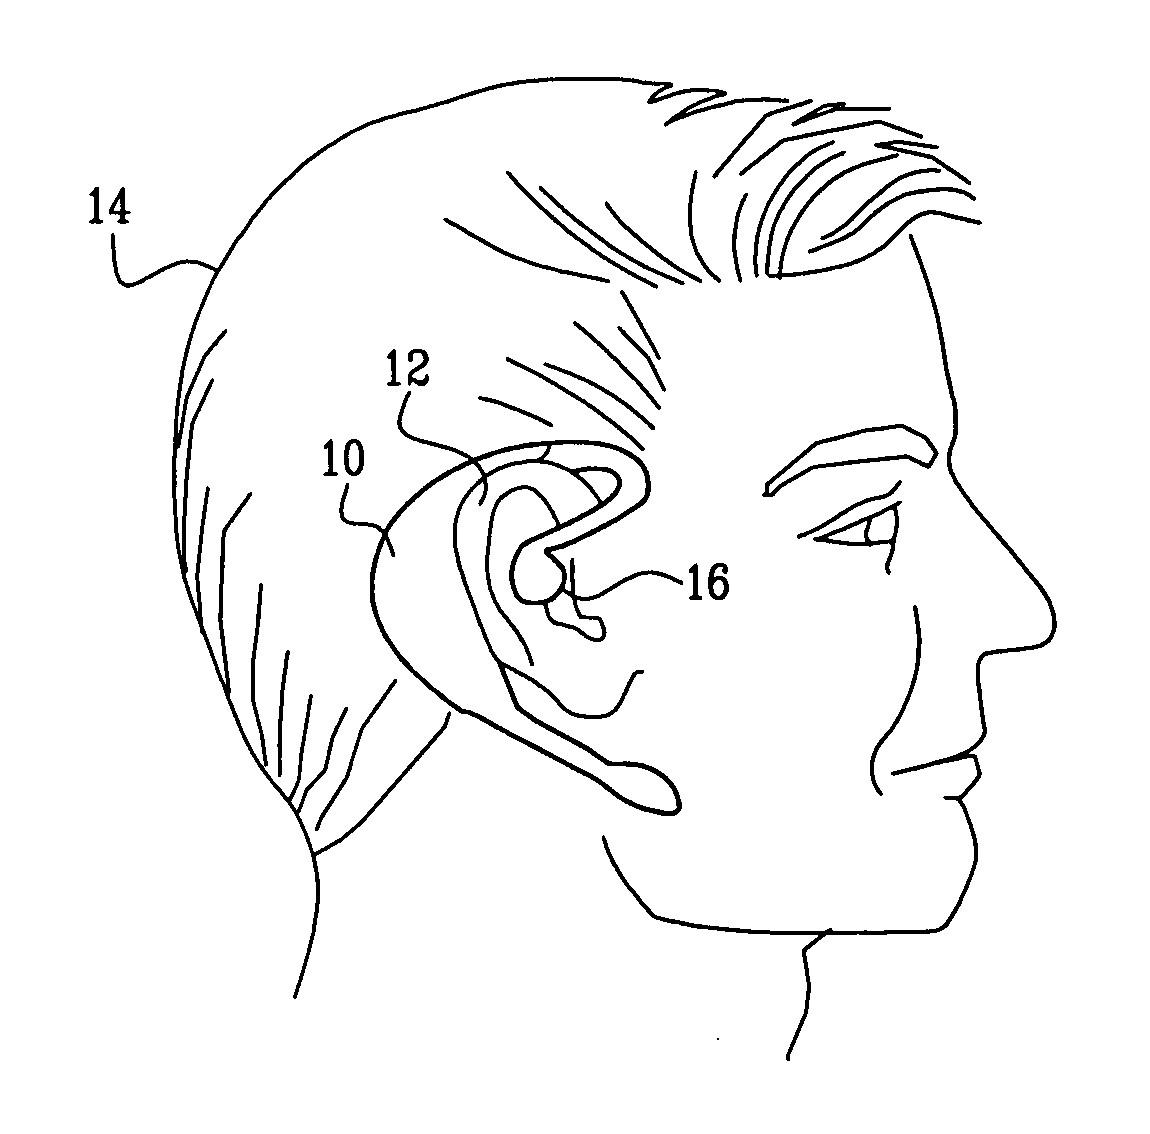 Ear-mounted biosensor